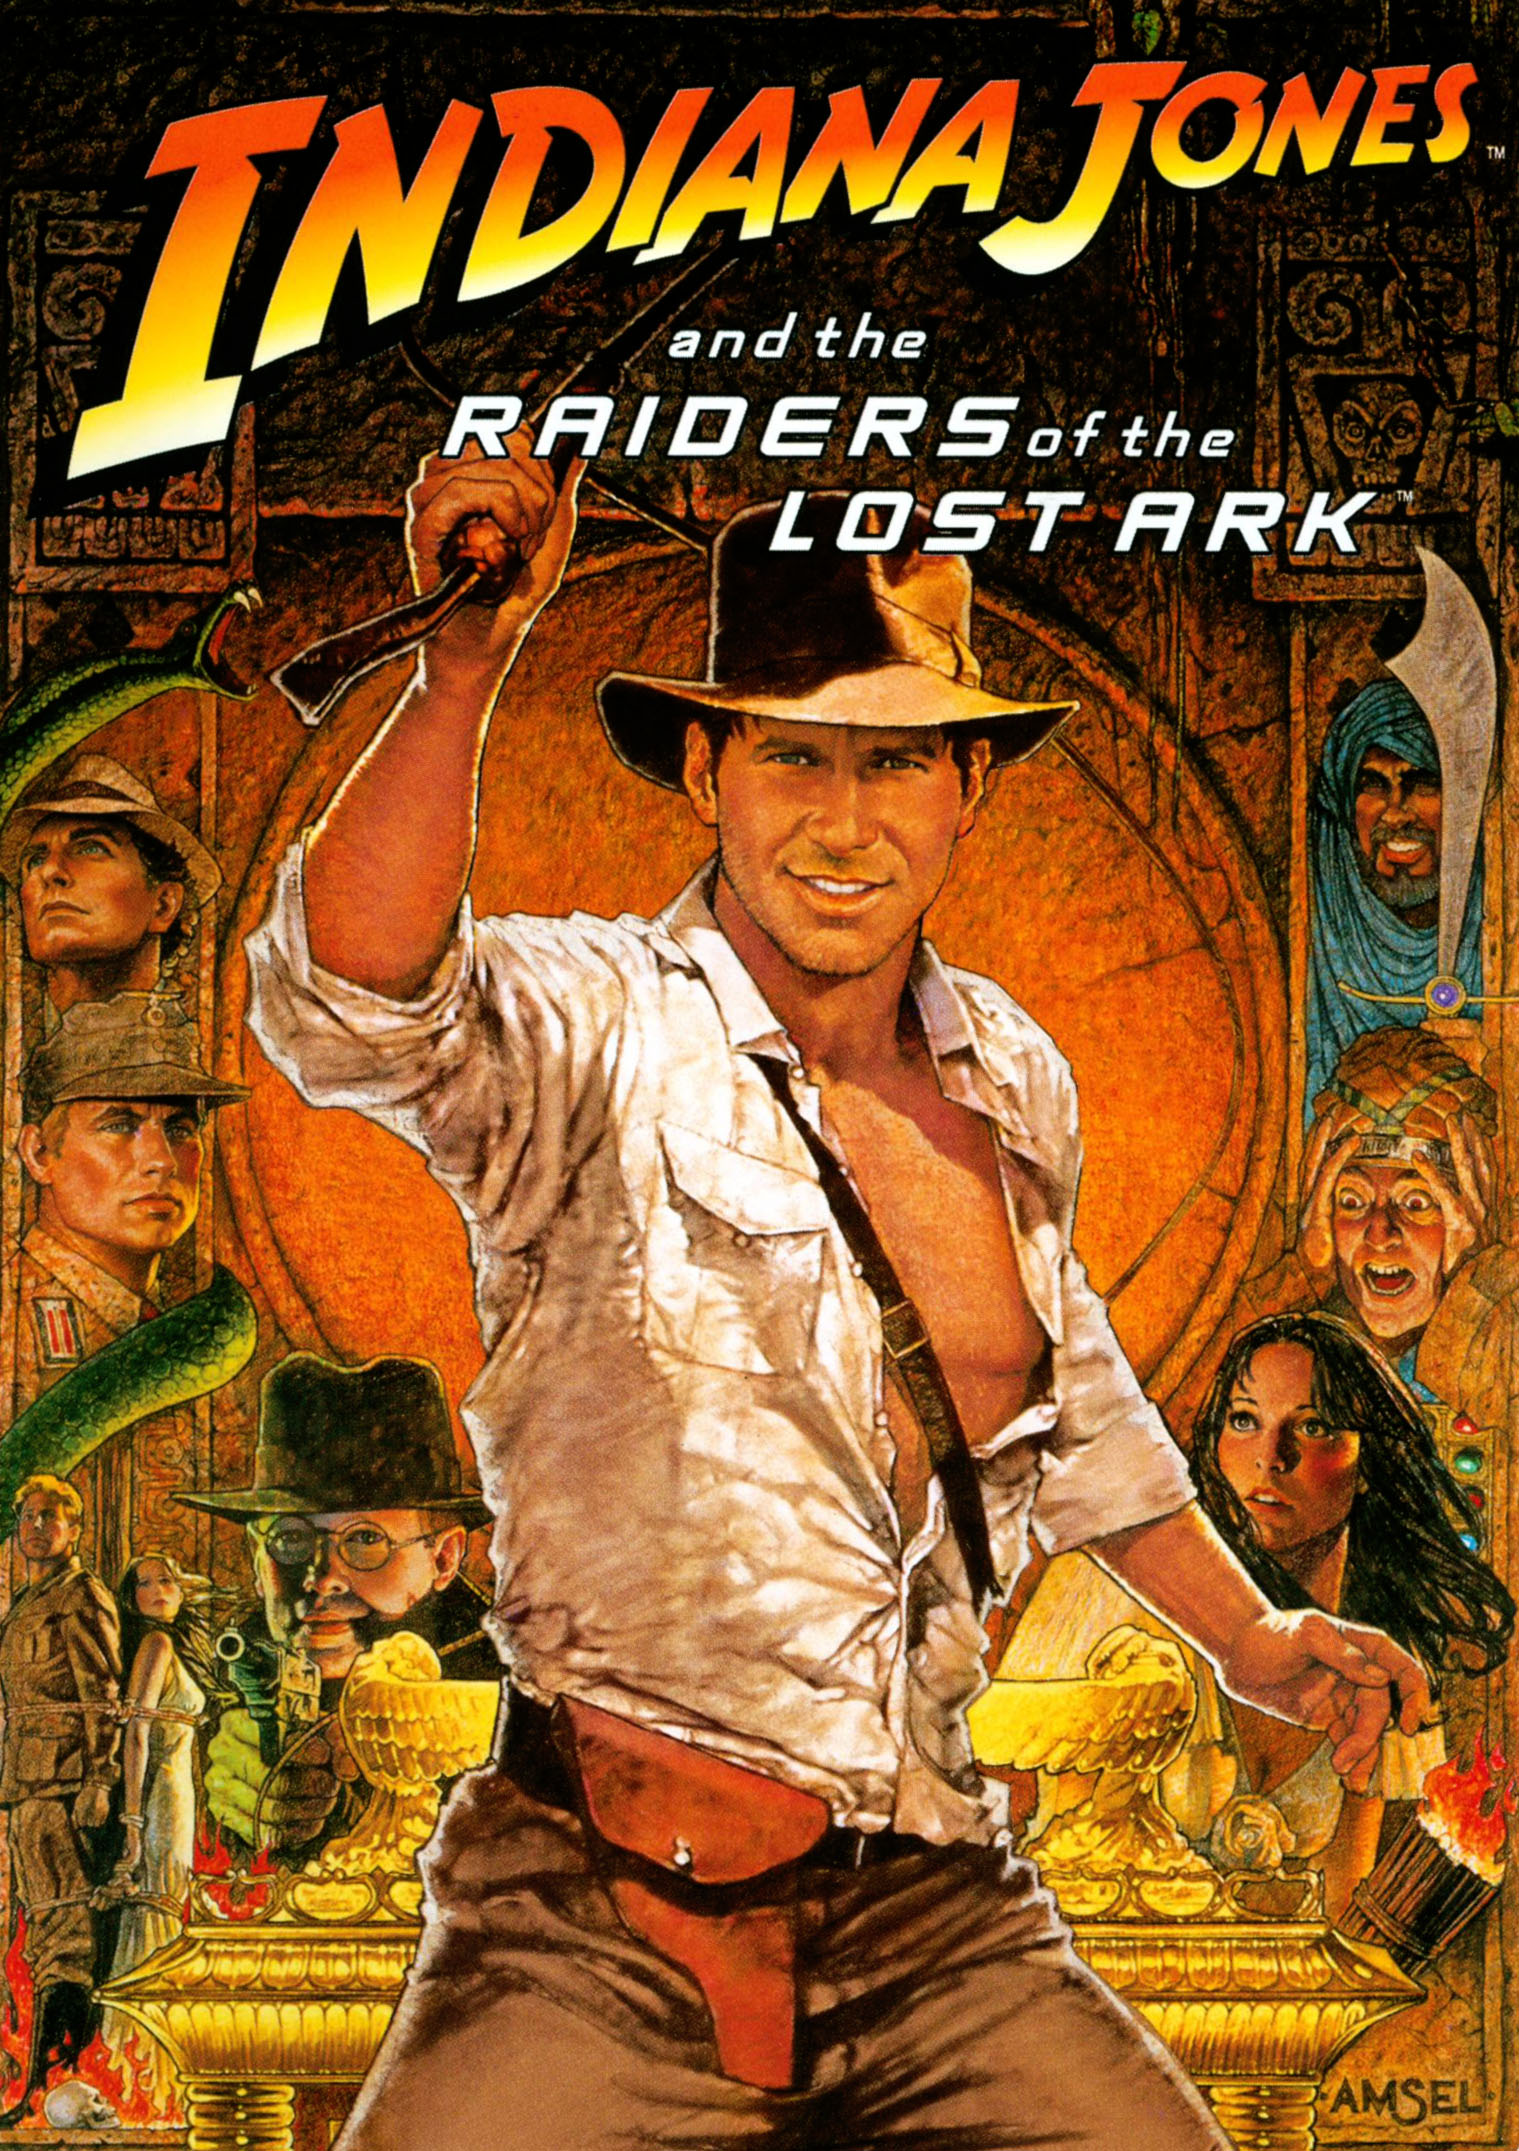 Film Analysis: Indiana Jones The Raiders Of The Lost Ark